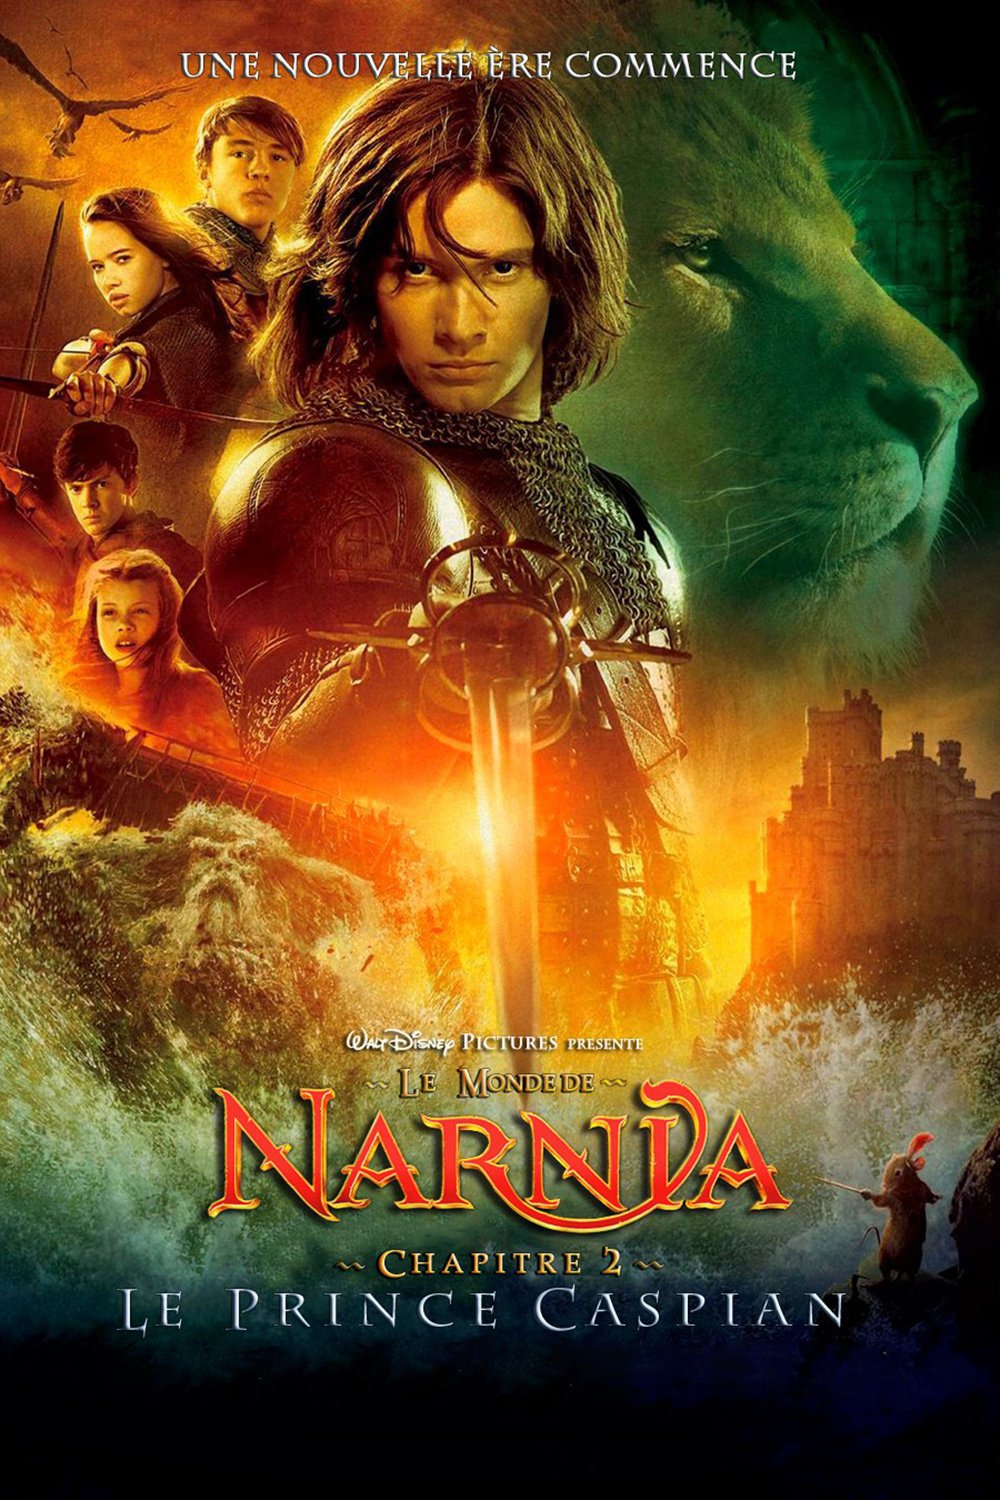 Le Monde de Narnia, chapitre 2 - Le Prince Caspian